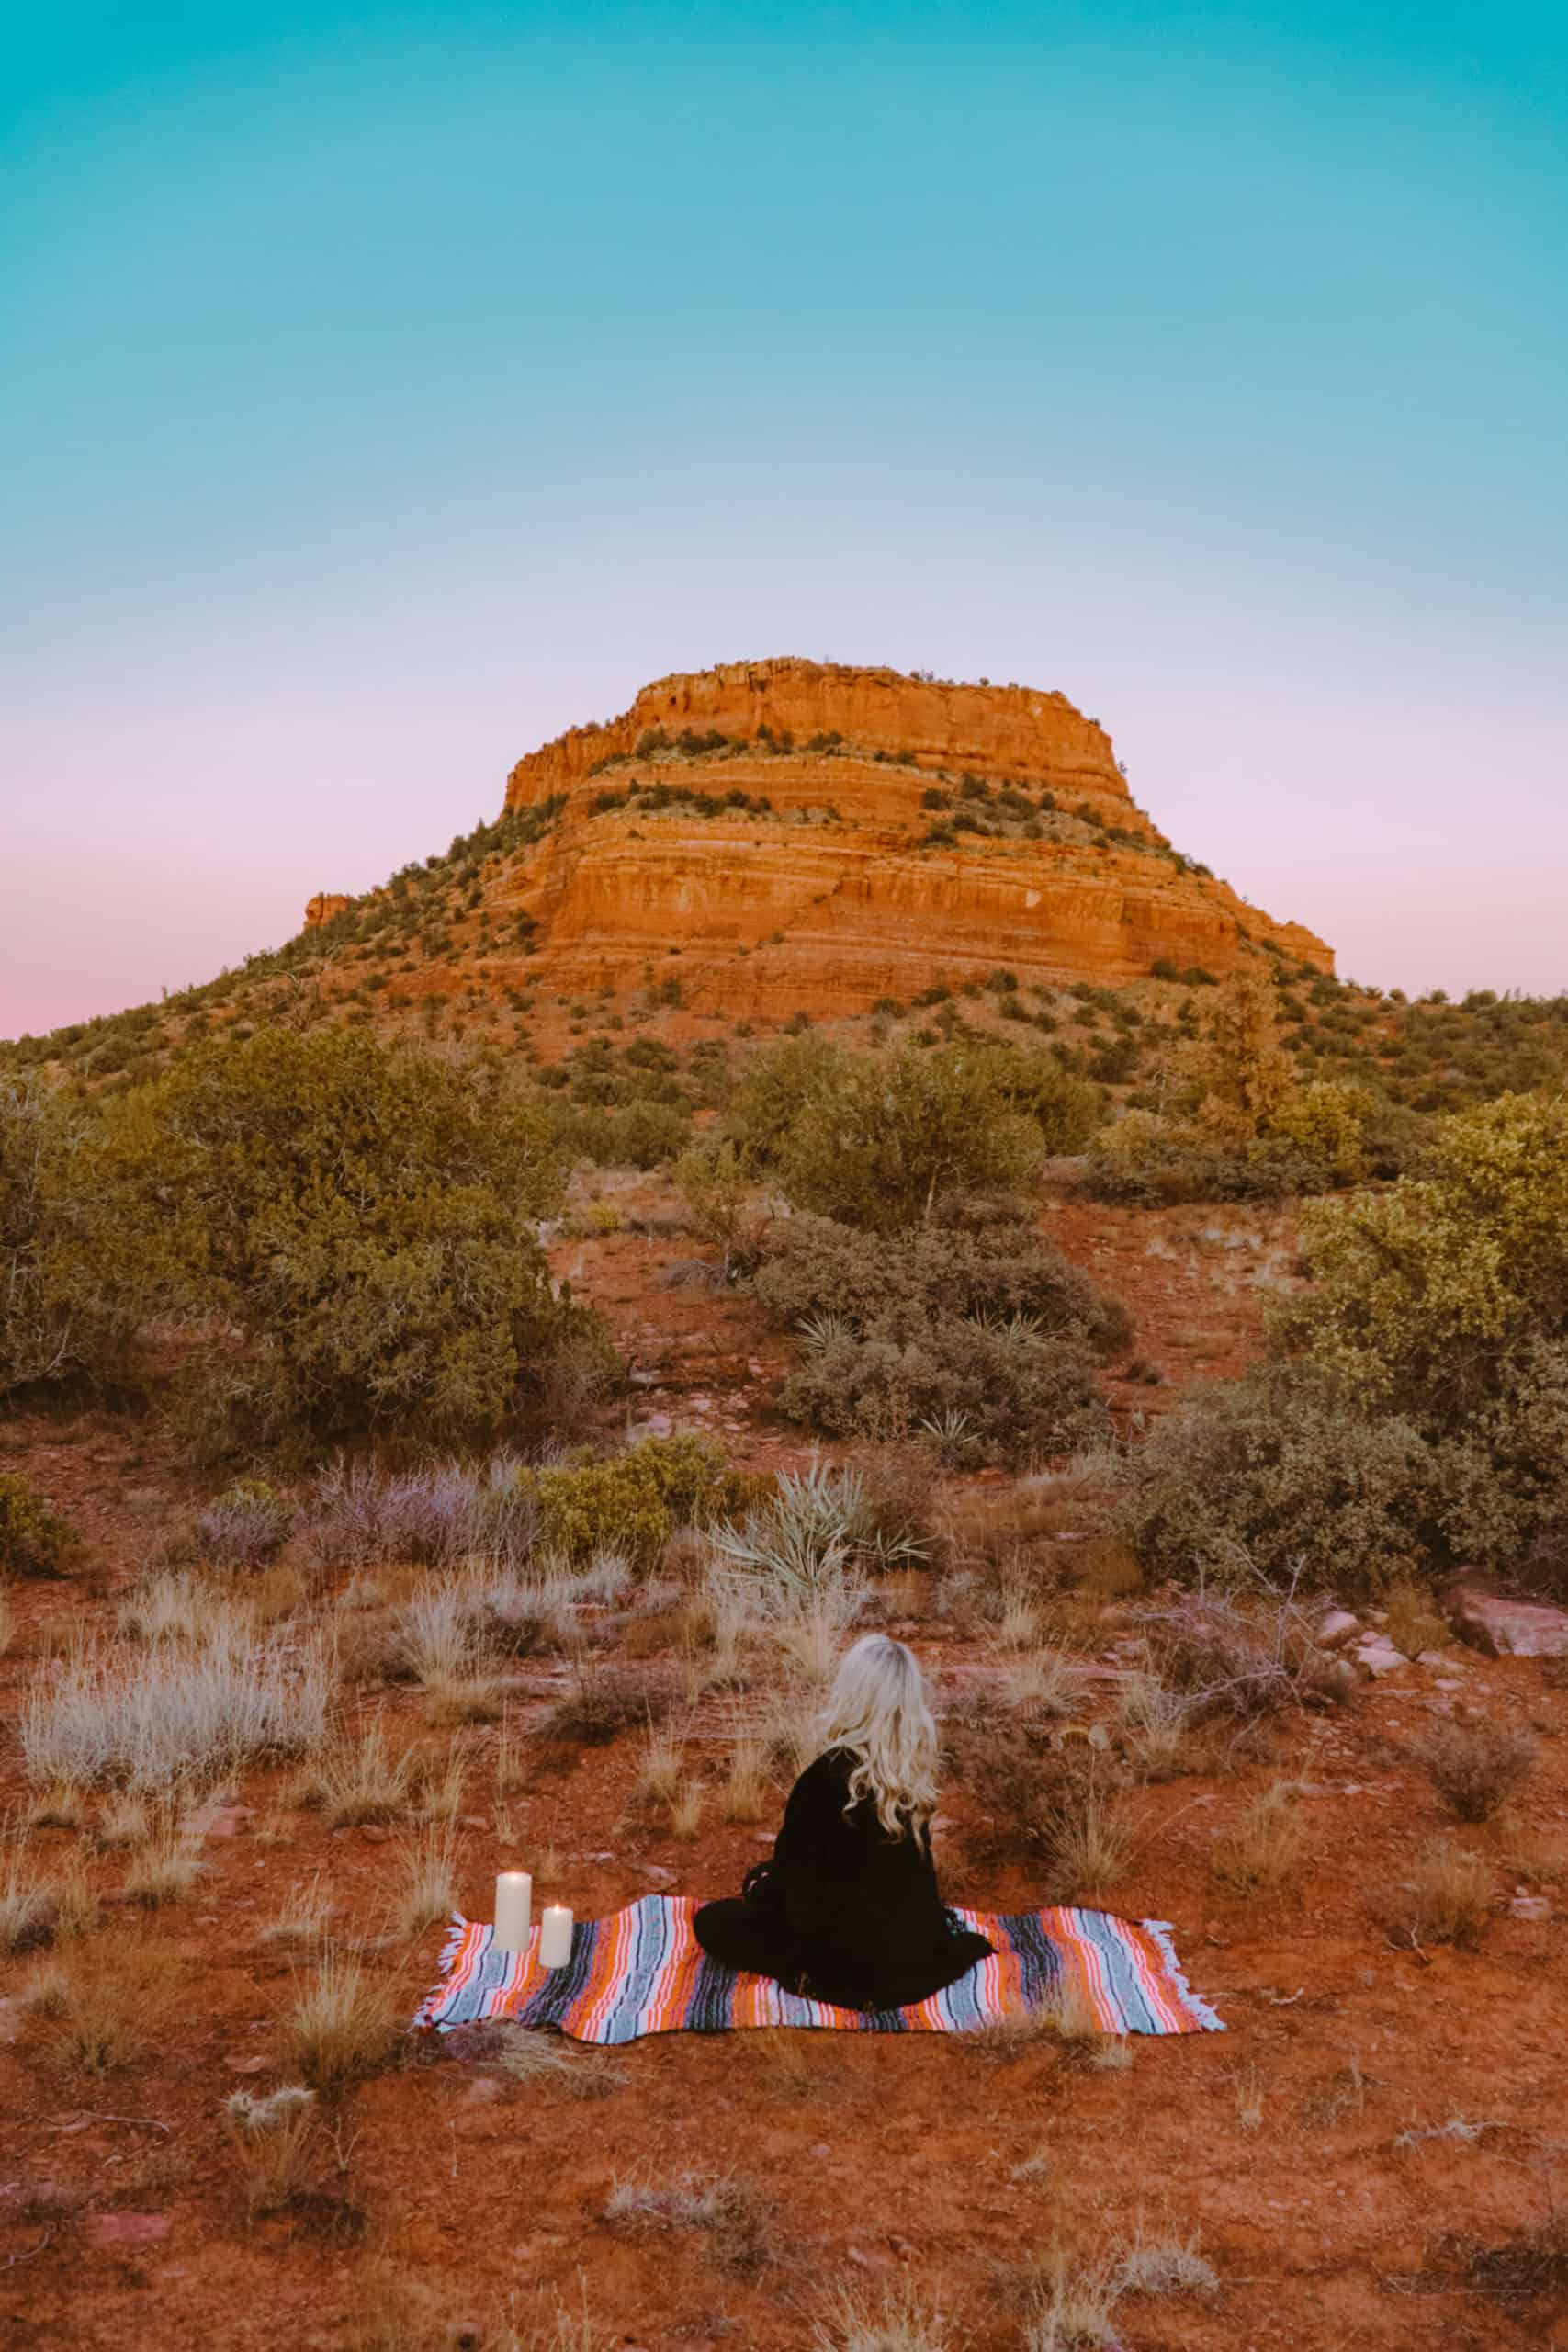 Picnic set up for a beautiful desert sunset in Sedona, Arizona